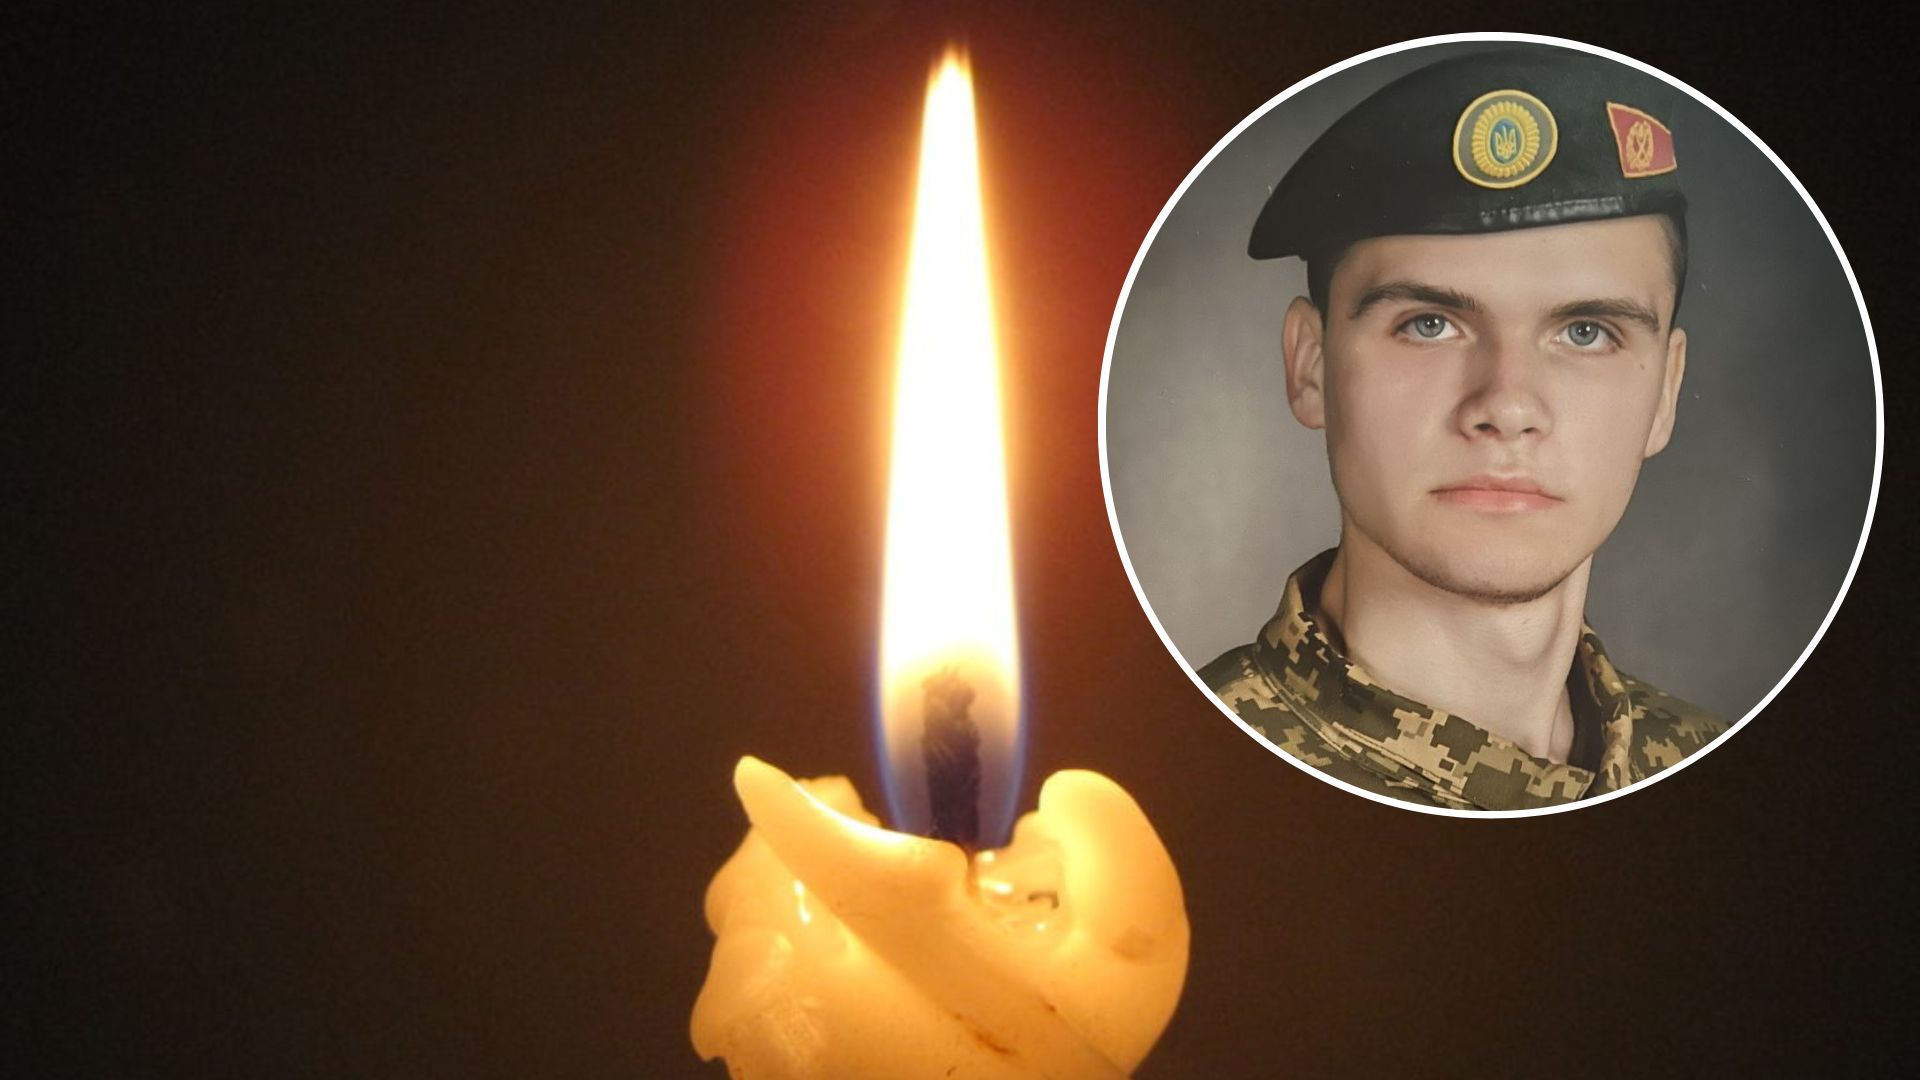 Максим Гостев - на войне погиб 23-летний защитник - 24 Канал